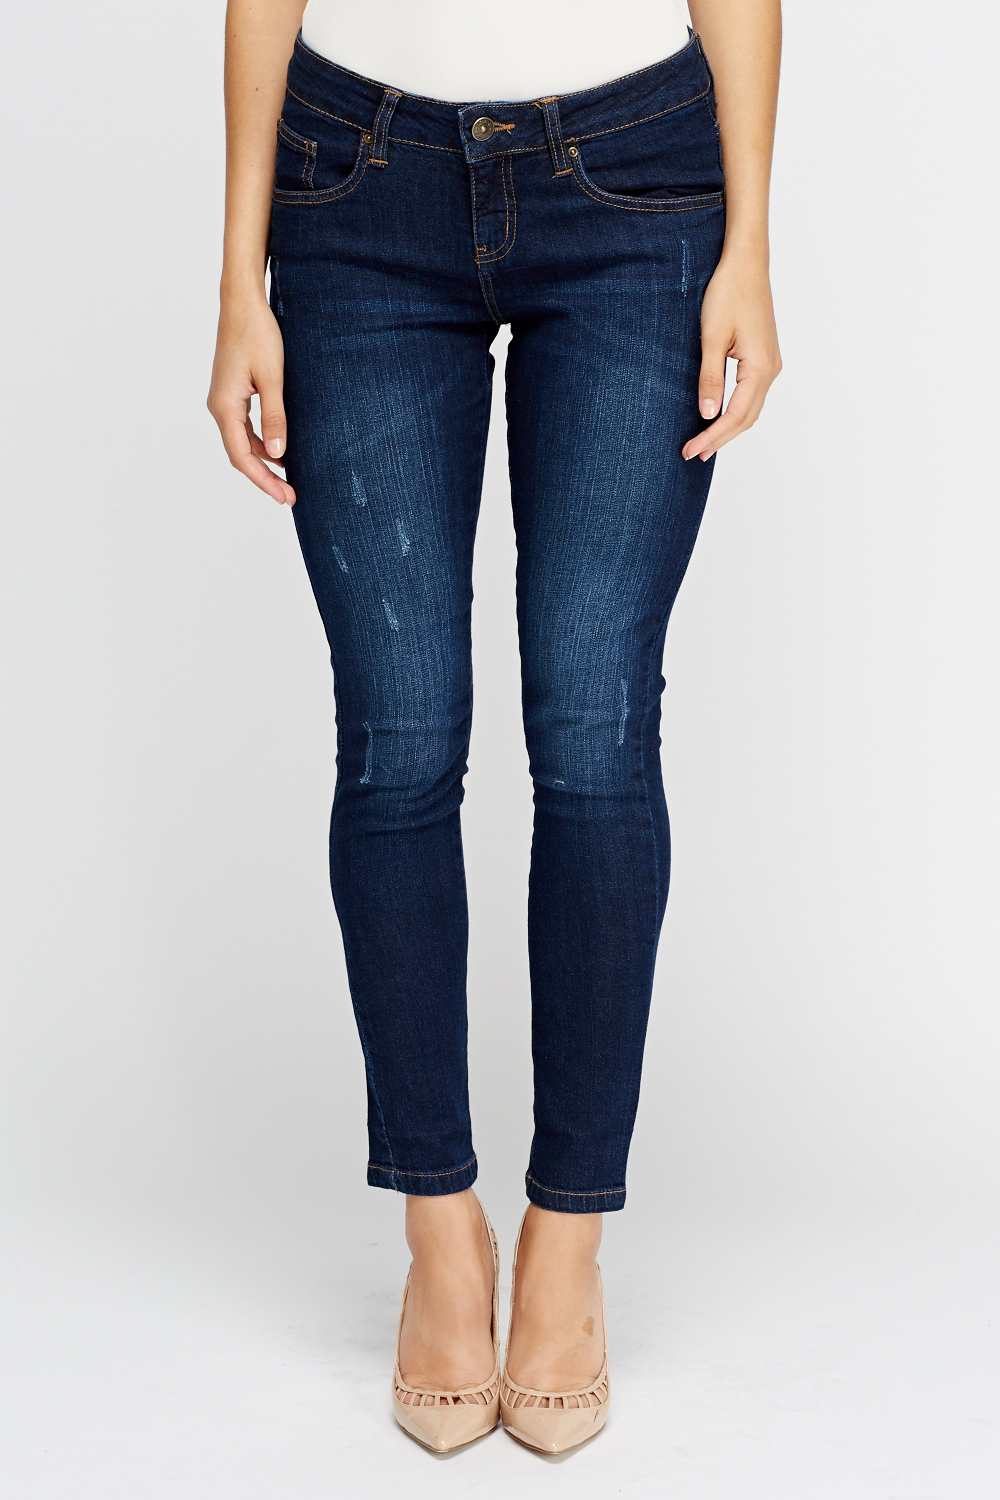 Straight Leg Dark Blue Jeans - Just $7